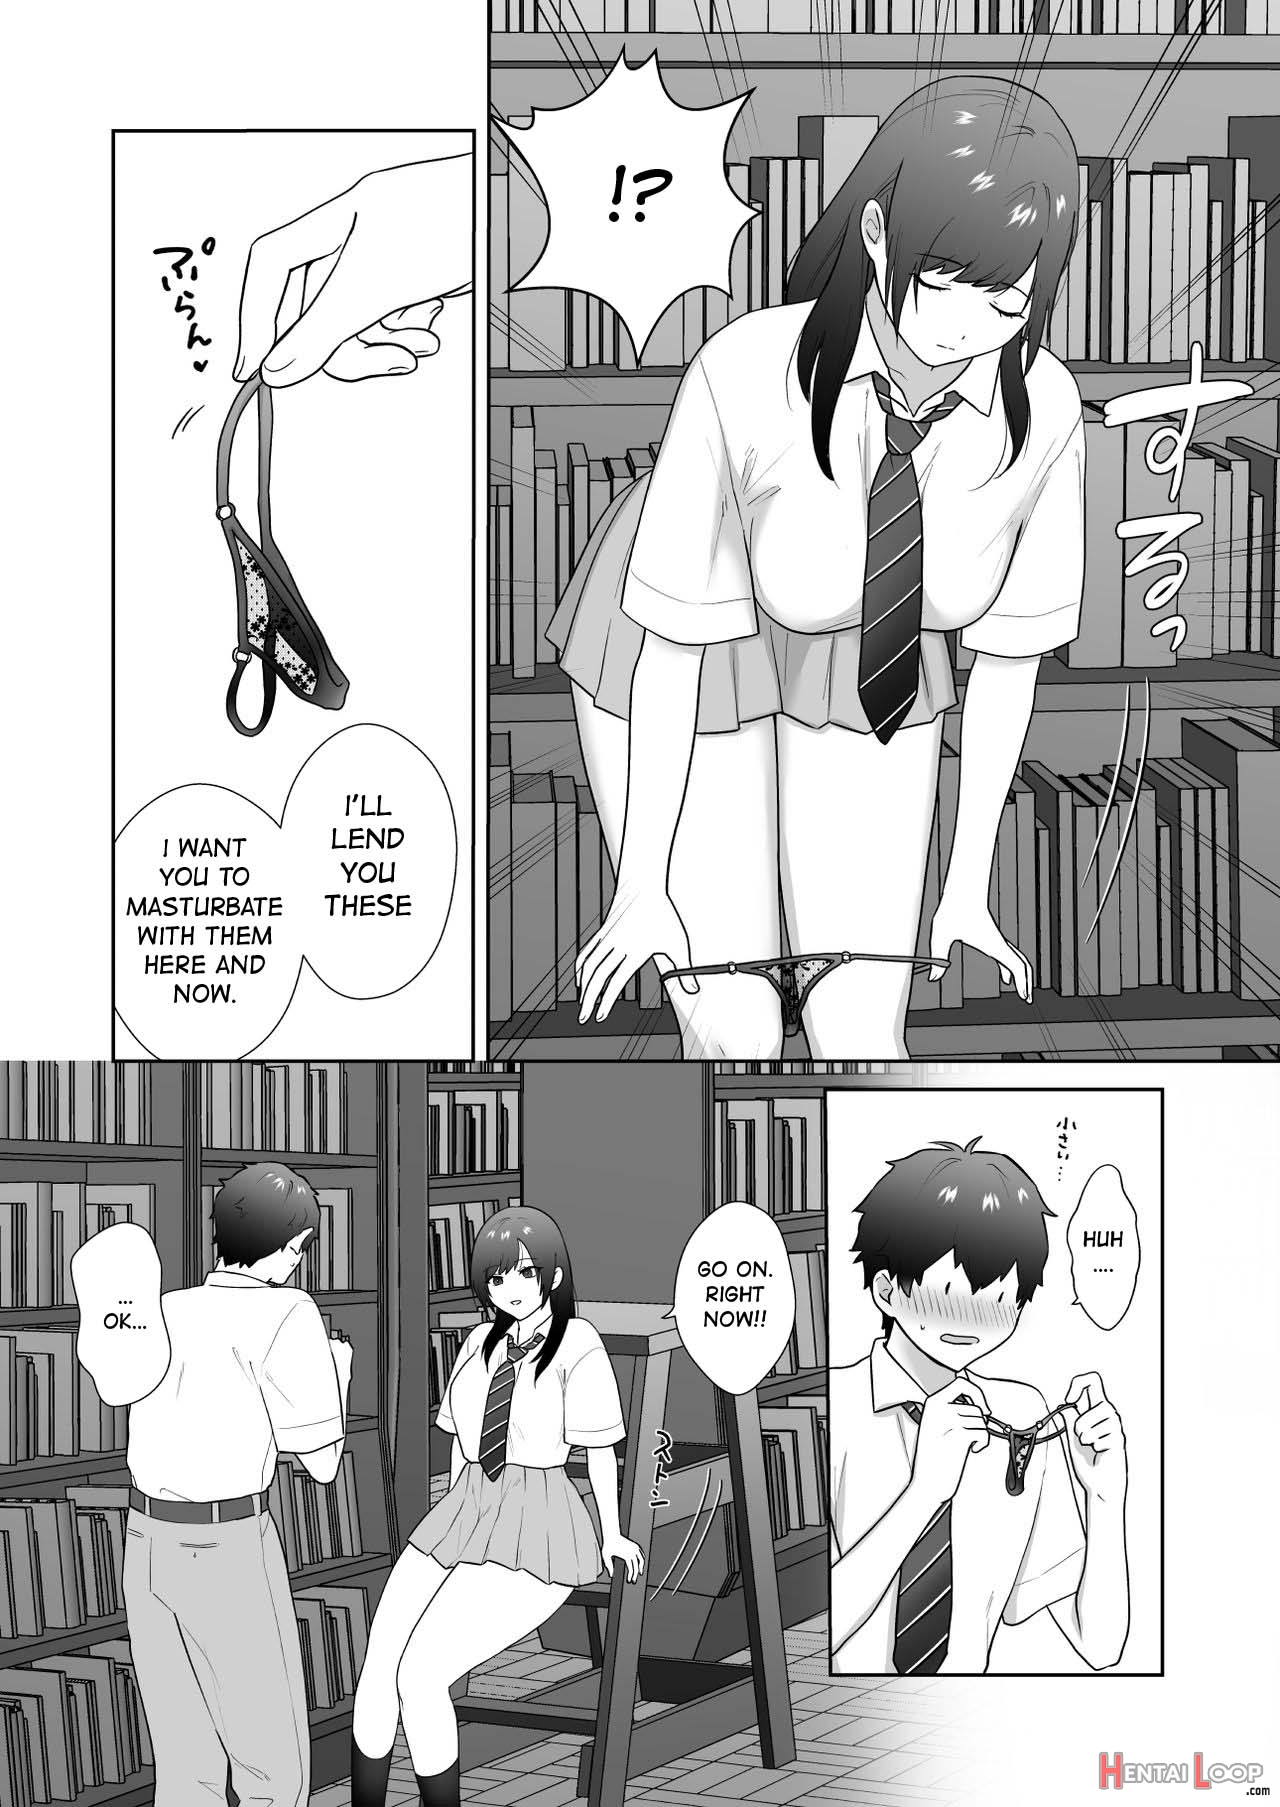 Toshoiin No Karen-san 3 page 7